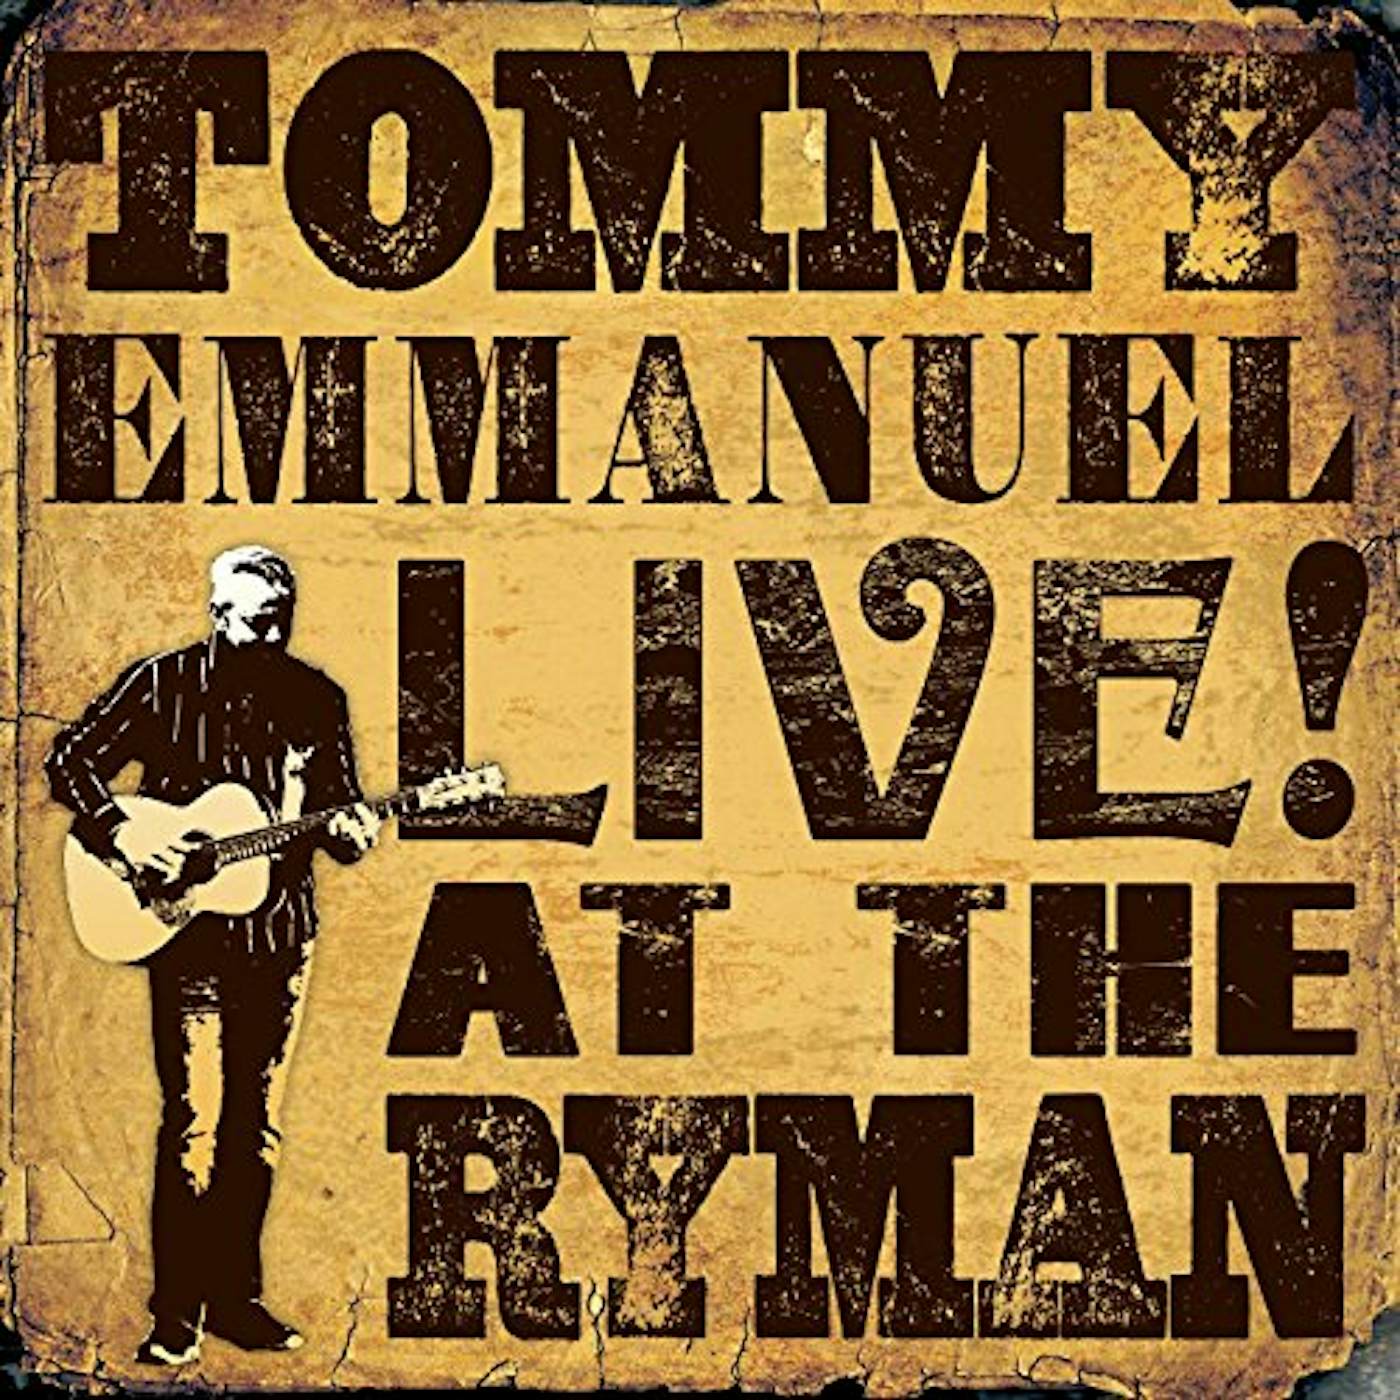 Tommy Emmanuel LIVE AT THE RYMAN CD